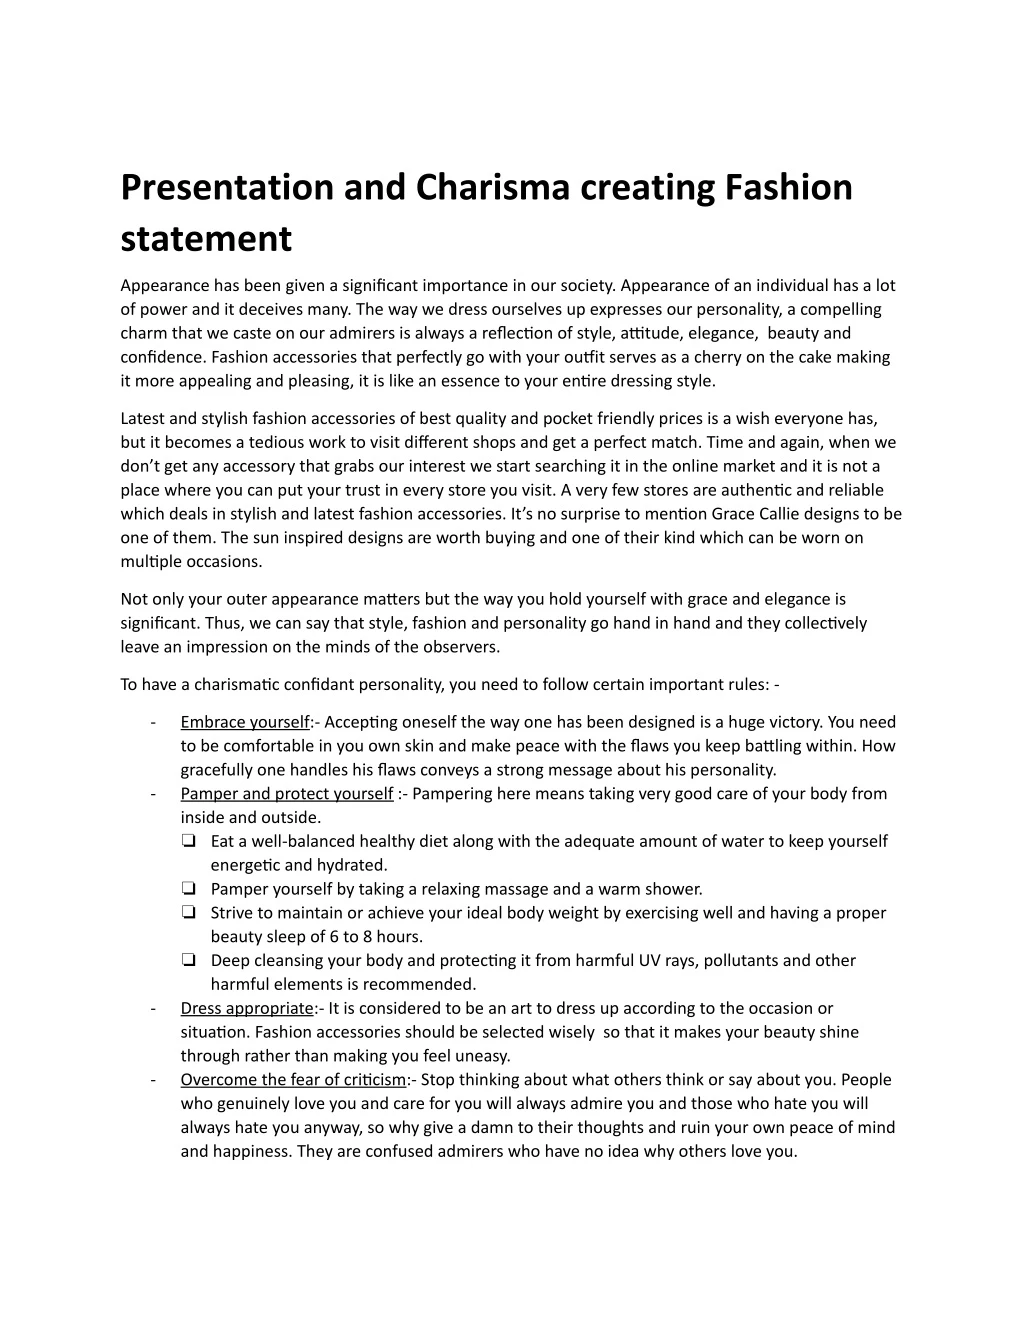 presentation and charisma creating fashion